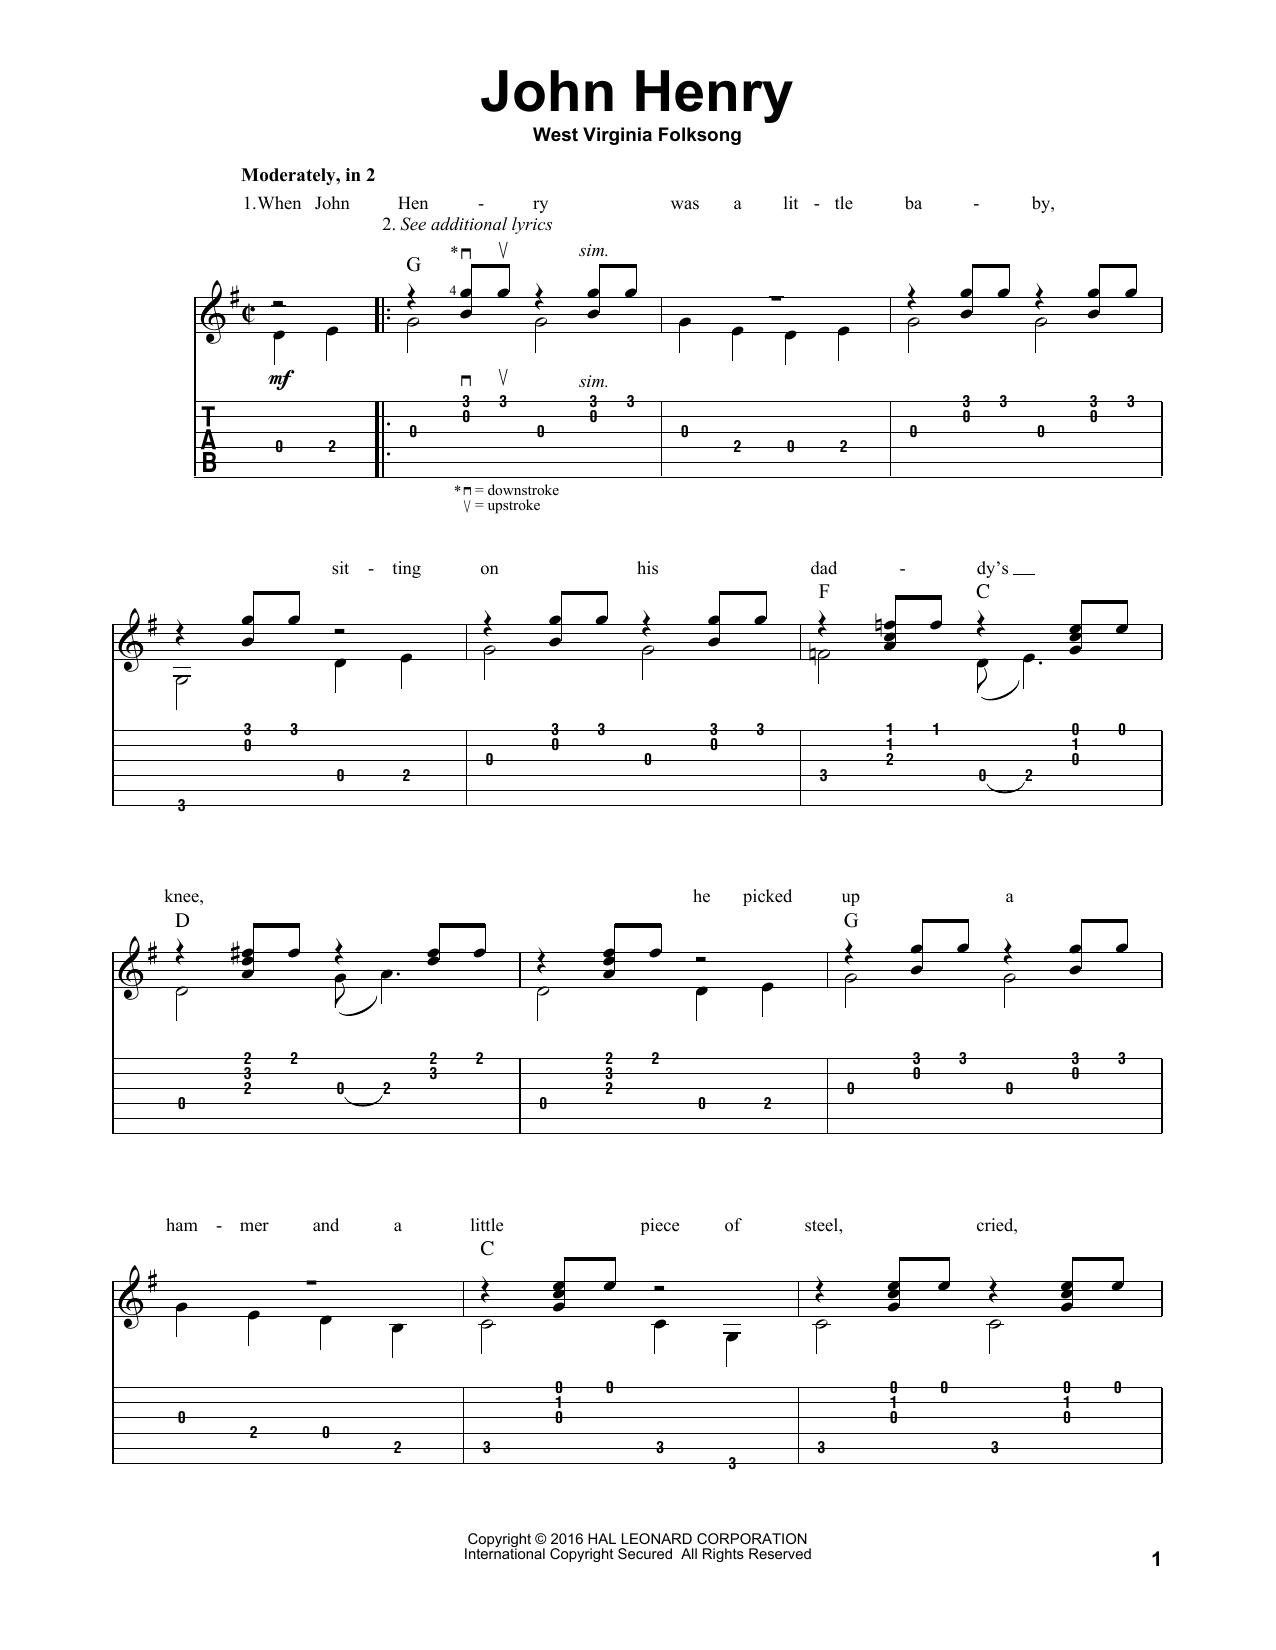 Mark Phillips John Henry Sheet Music Notes & Chords for Guitar Tab - Download or Print PDF